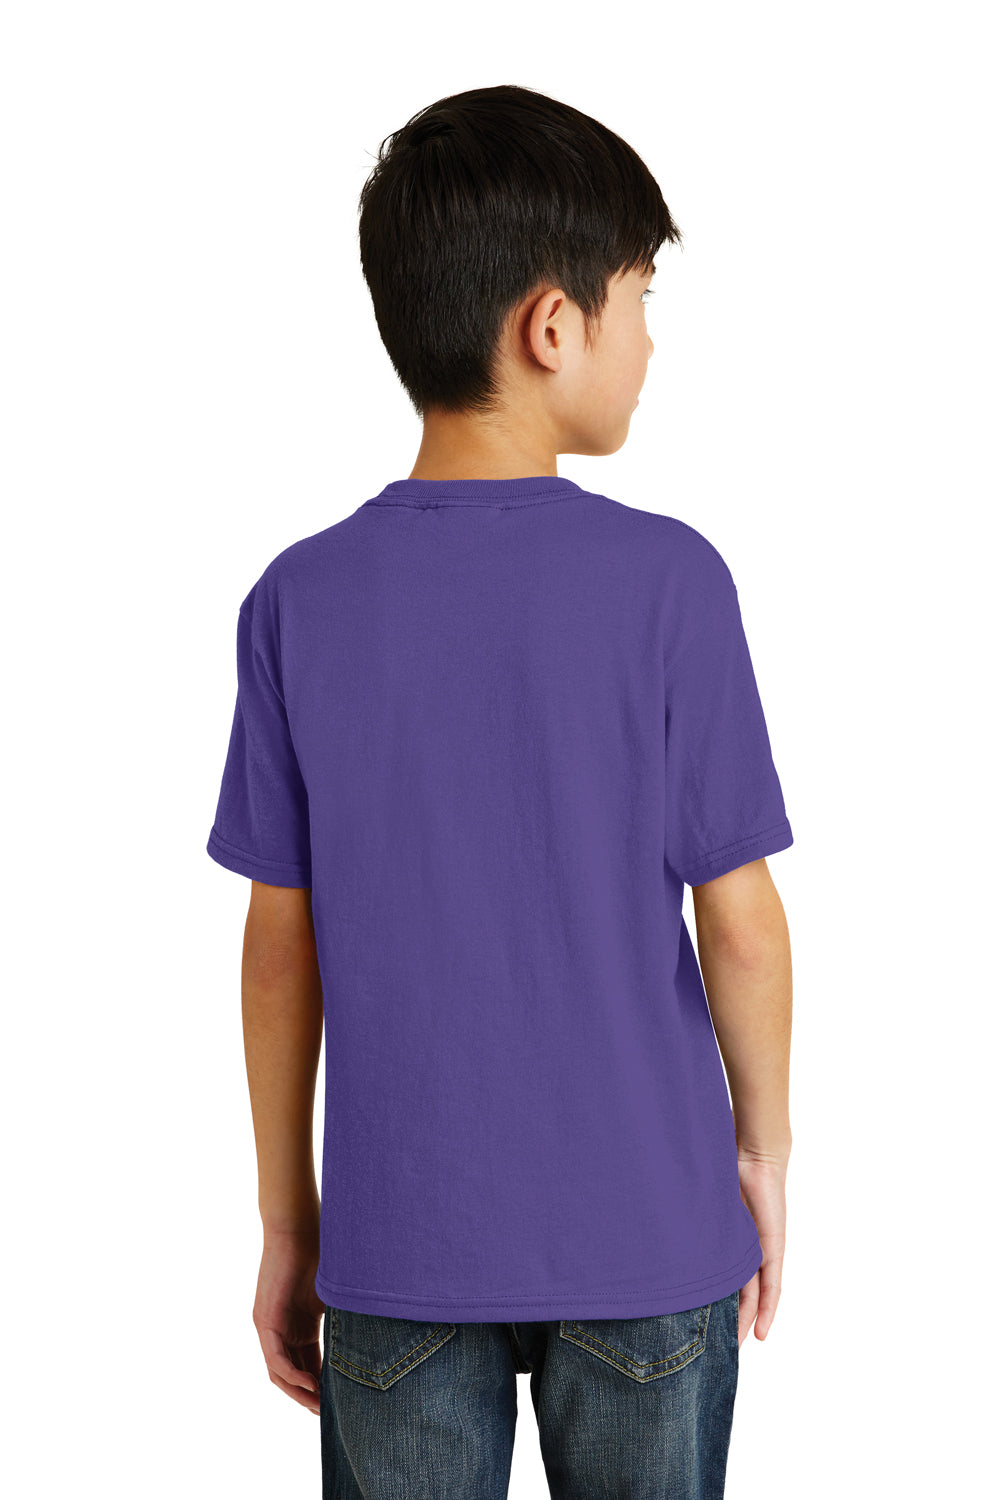 Port & Company PC55Y Youth Core Short Sleeve Crewneck T-Shirt Purple Back